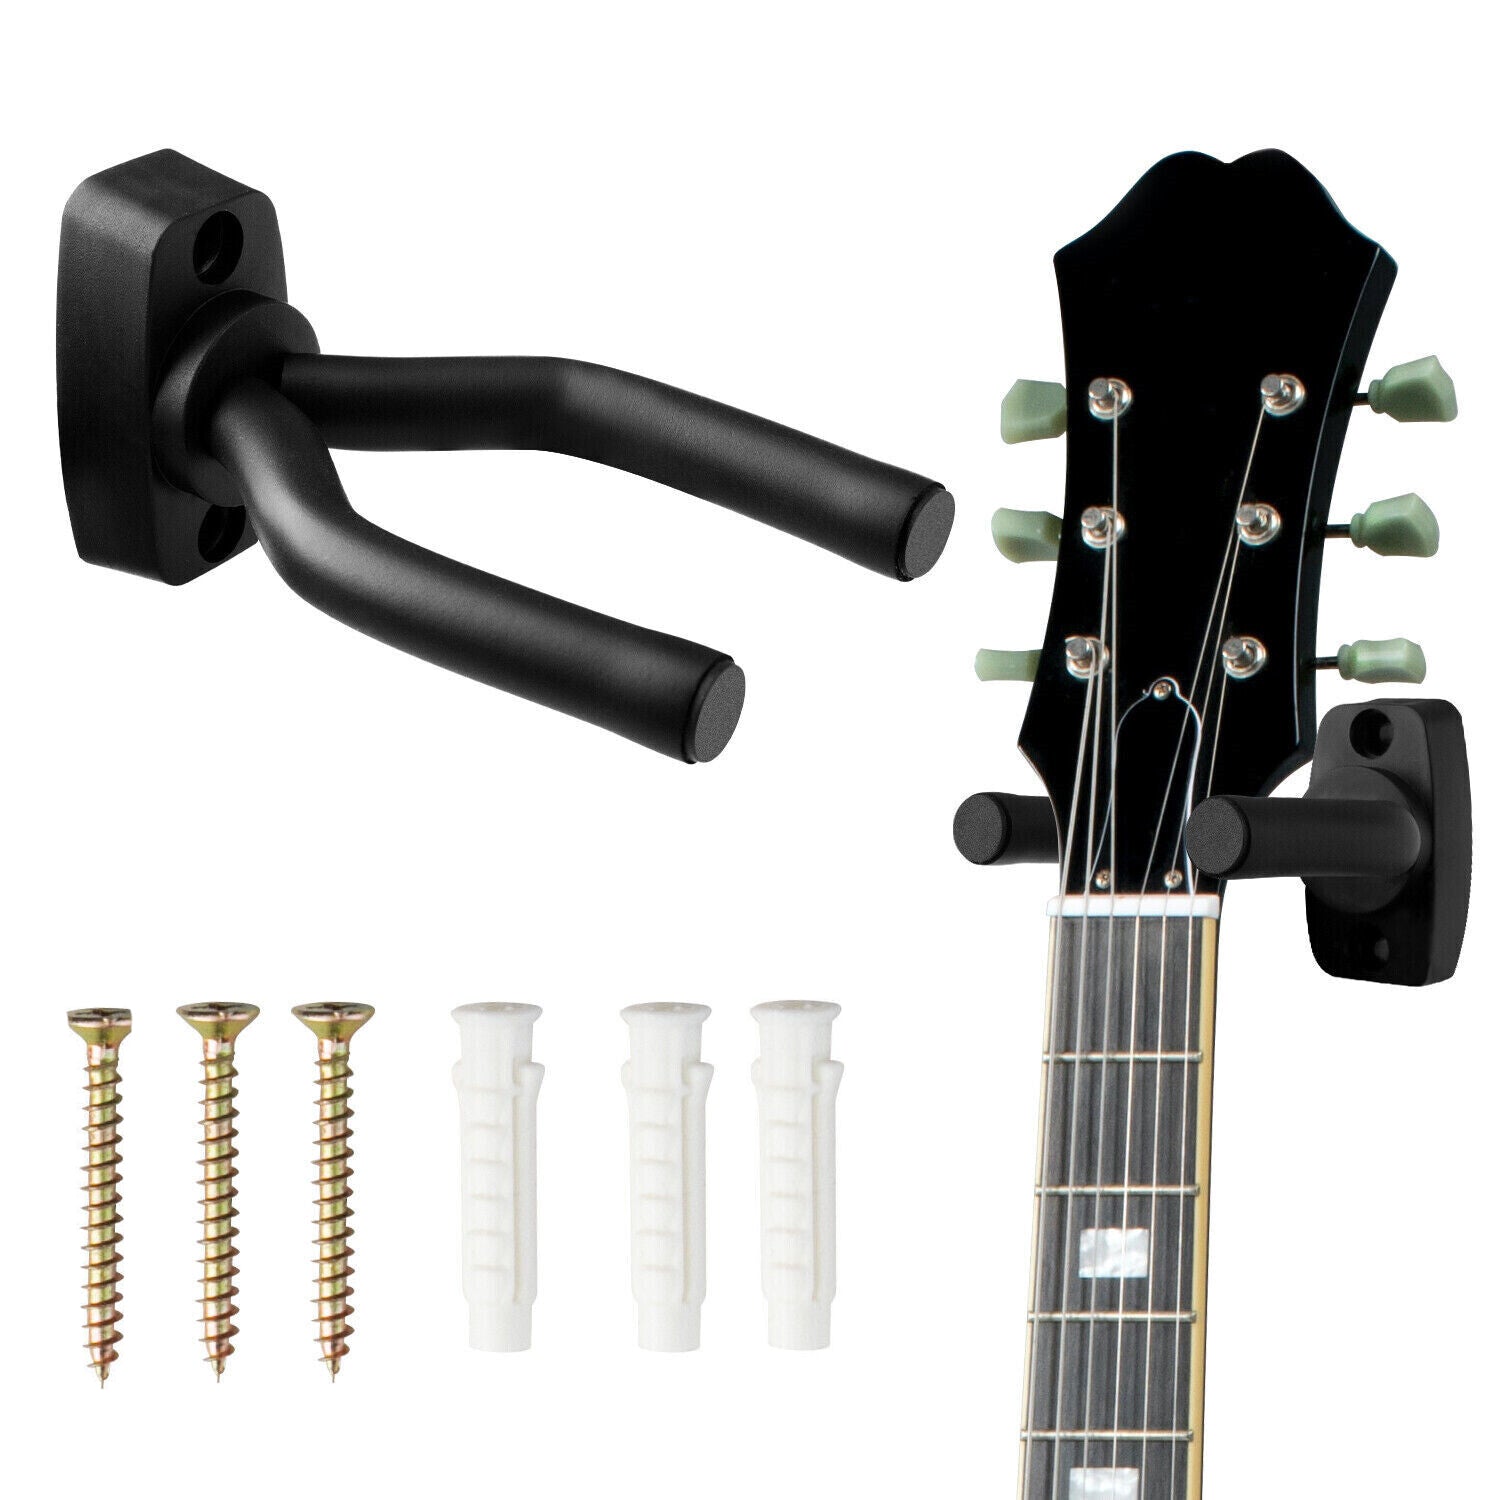 Guitar Wall Mount Metal Guitar Hanger with Rotatable Hook | EastTone® - Stringspeed